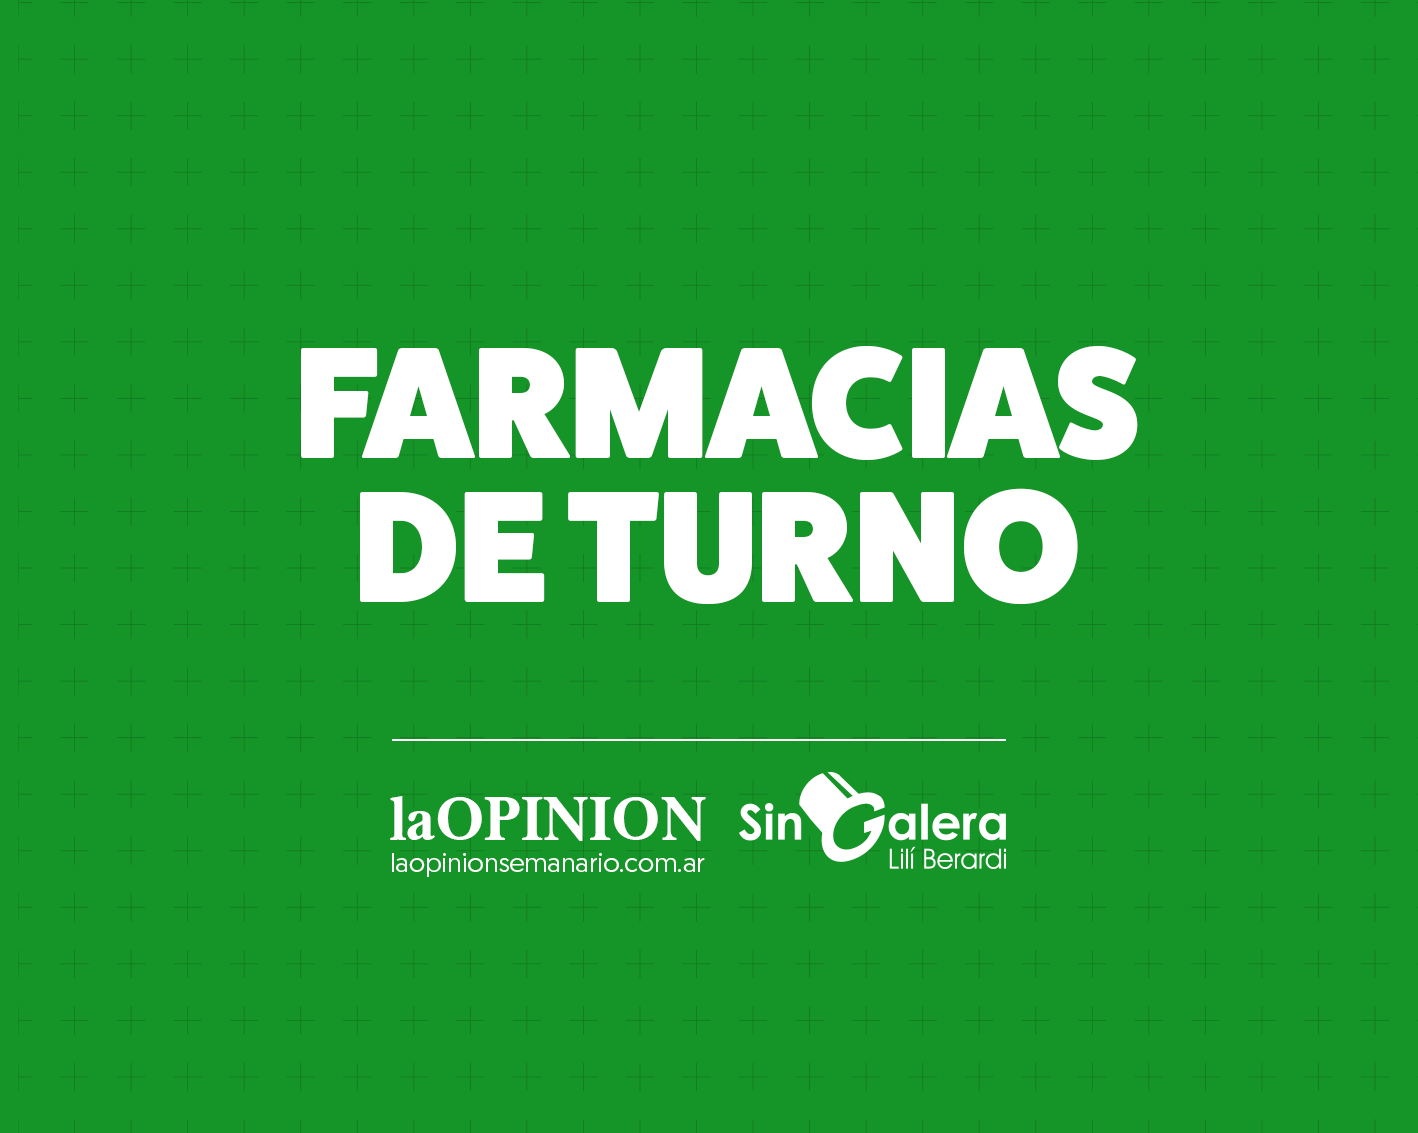 Farmacias de turno 25/04: López, Otero y Marzorati